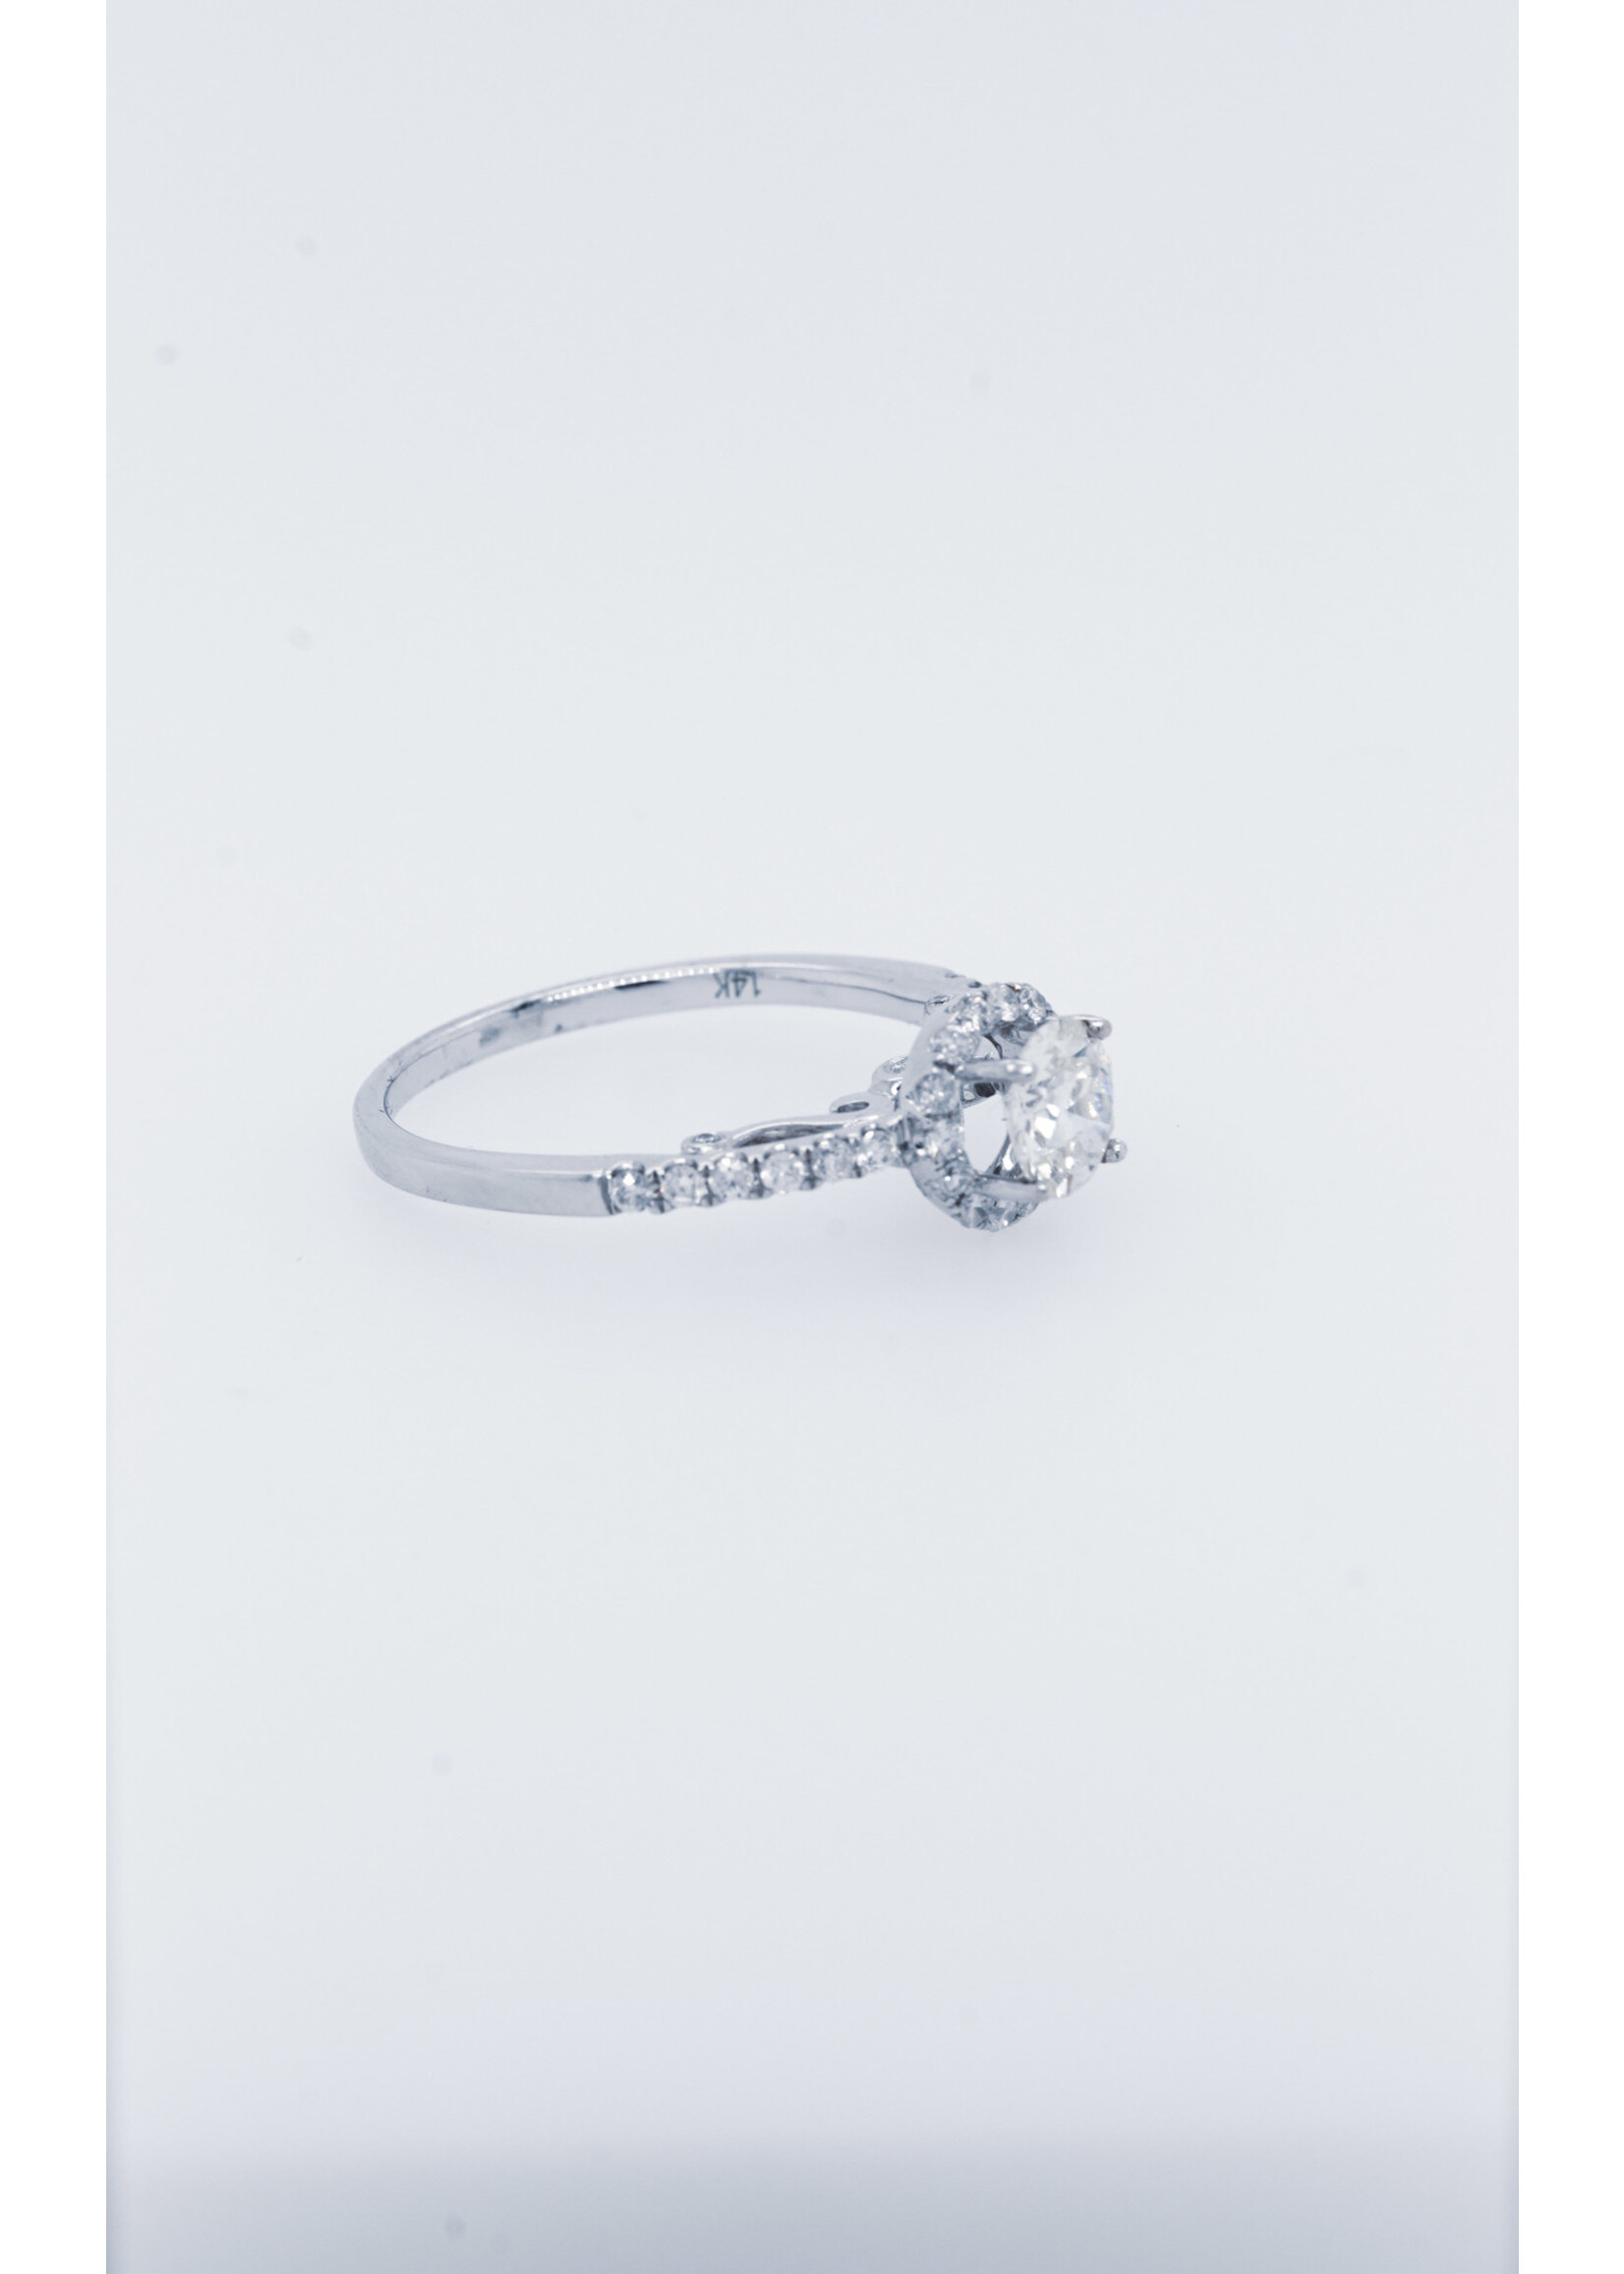 14KW 2.49g 1.18ctw (.70ctr) J/VS2 Old European Cut Diamond Halo Engagement Ring (size 6.5)